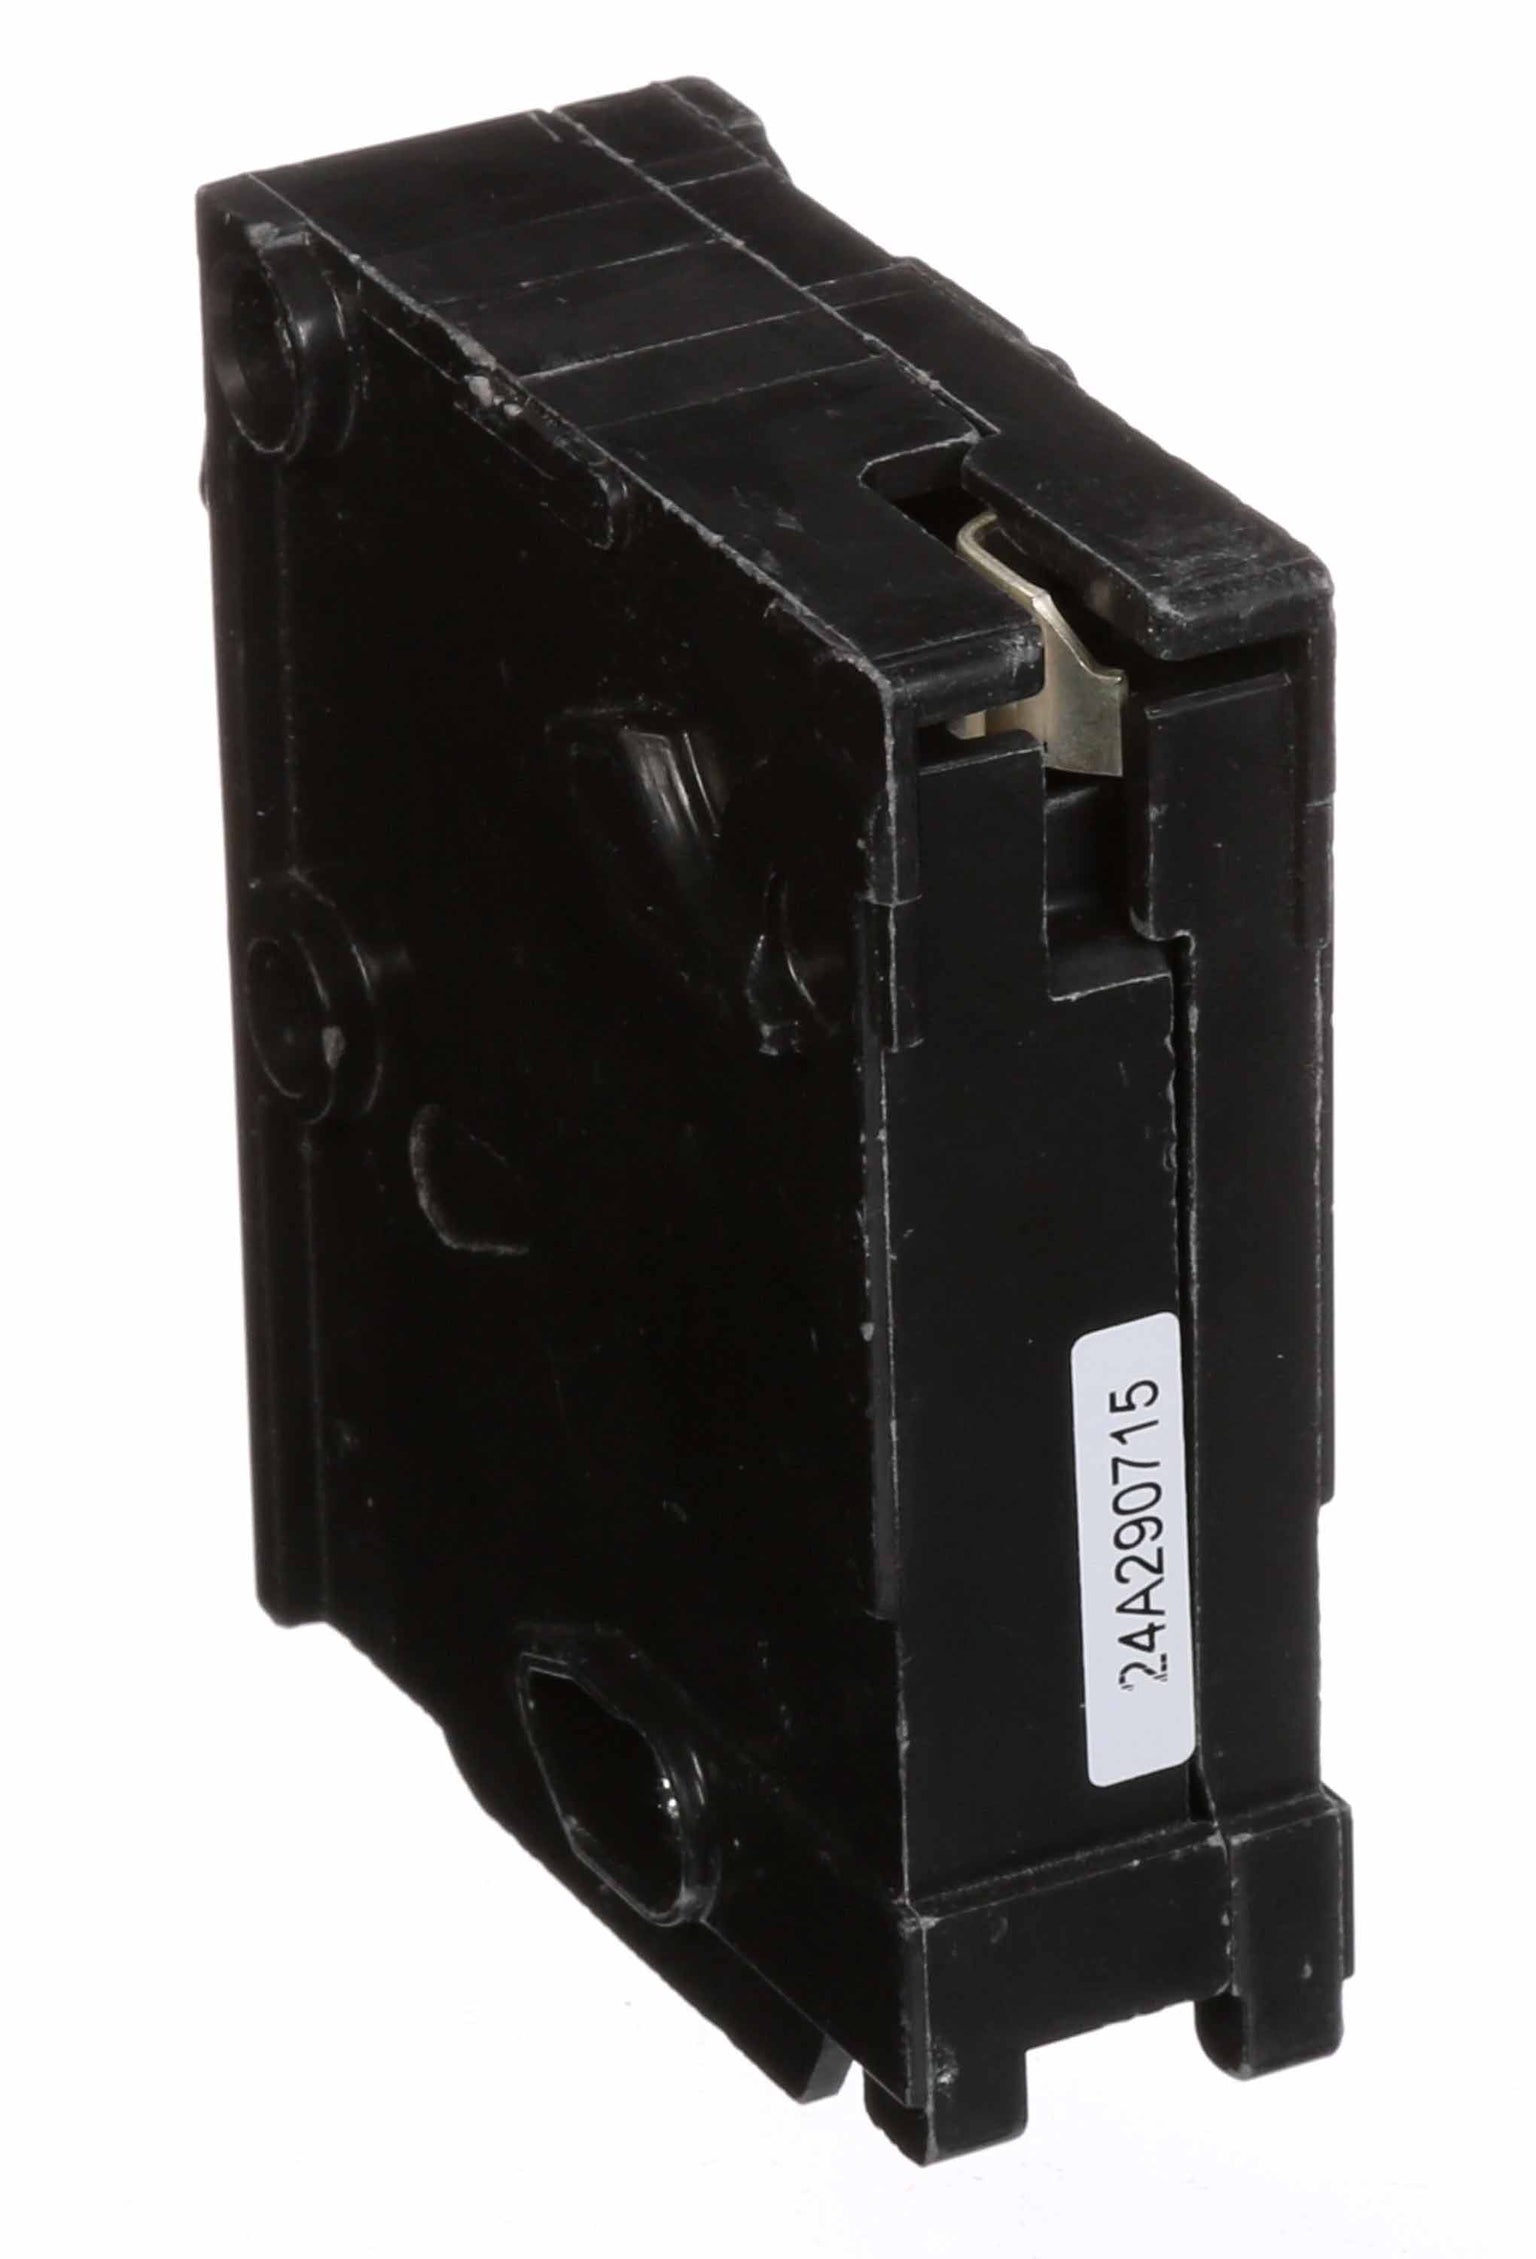 Q110 - Siemens - 10 Amp Molded Case Circuit Breaker